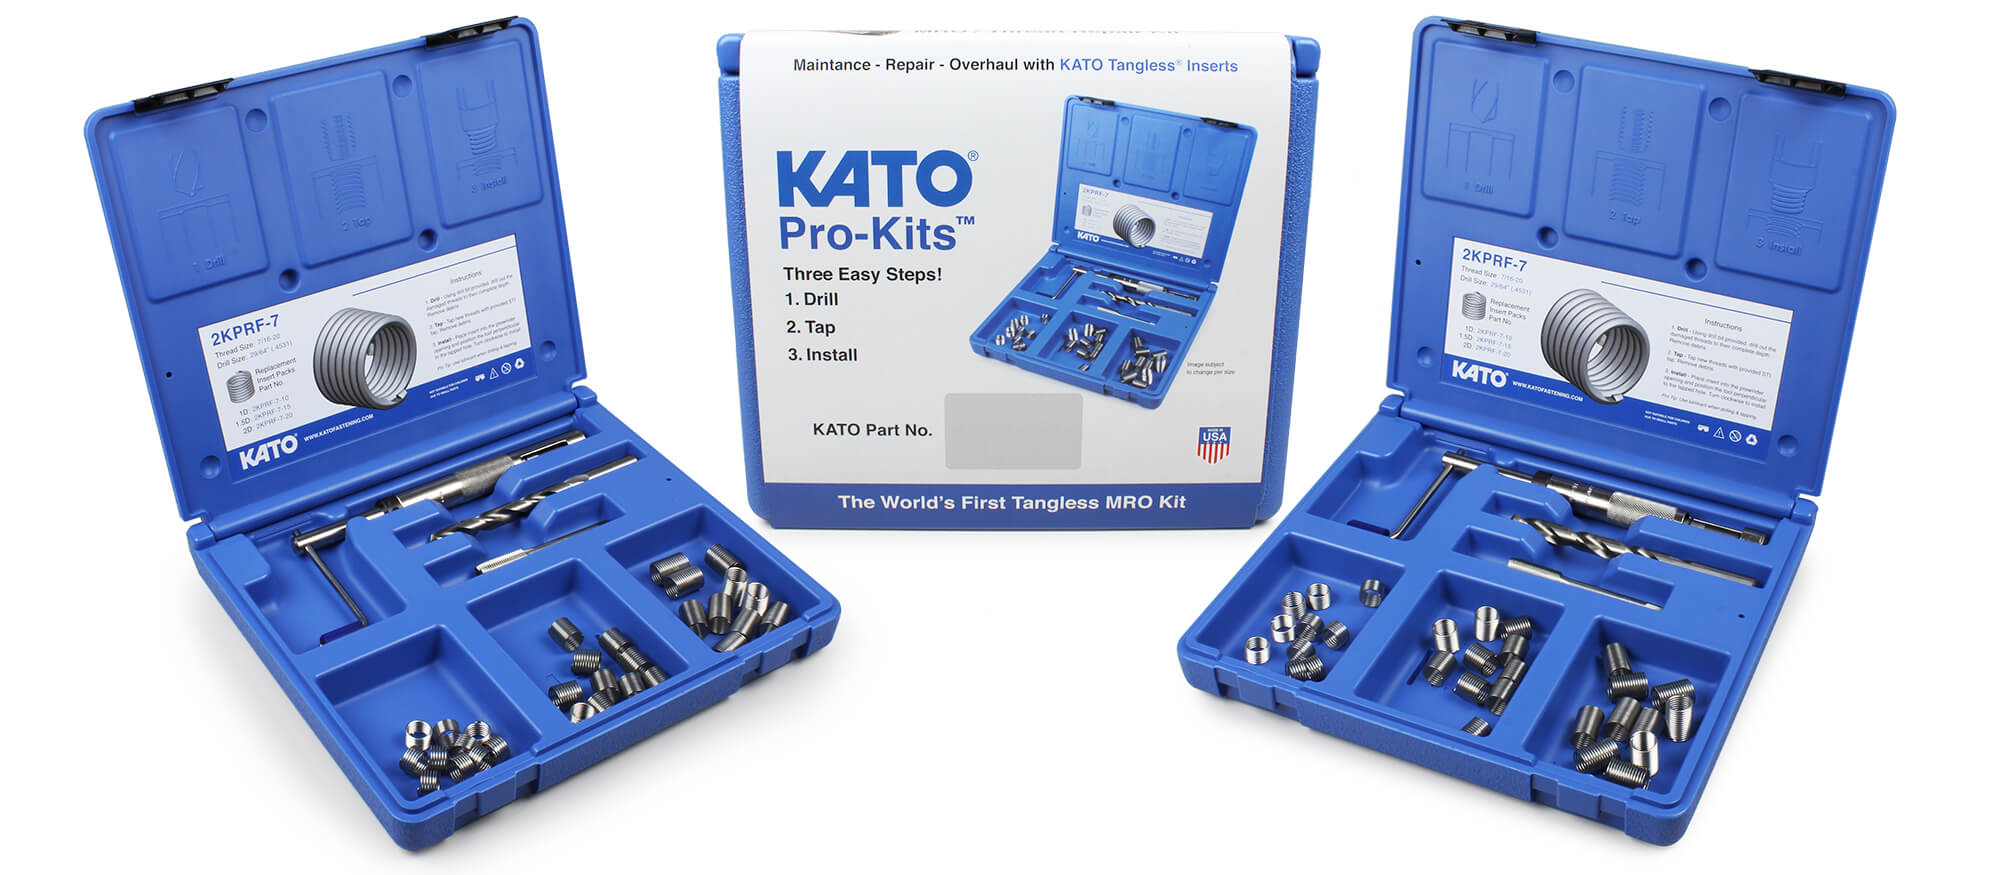 KATO Tangless Pro-Kits